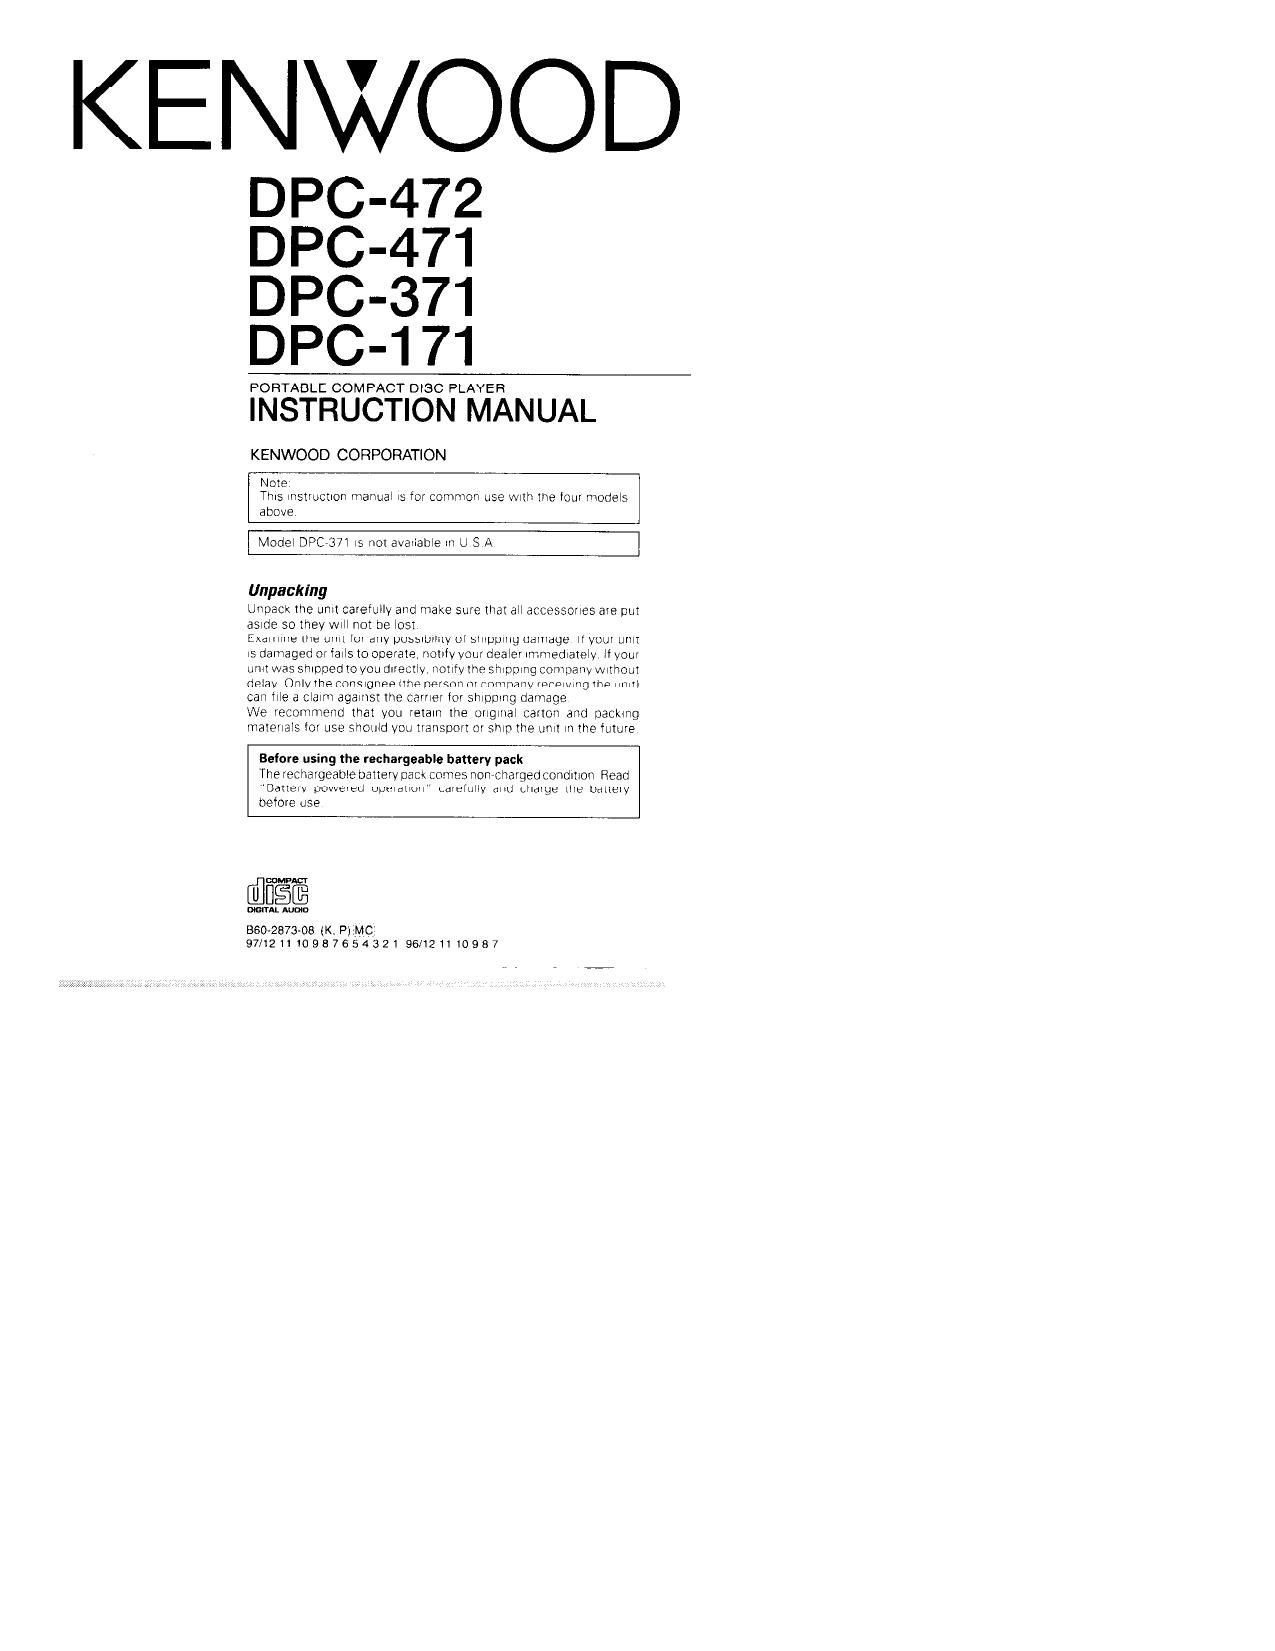 Kenwood DPC 171 Owners Manual